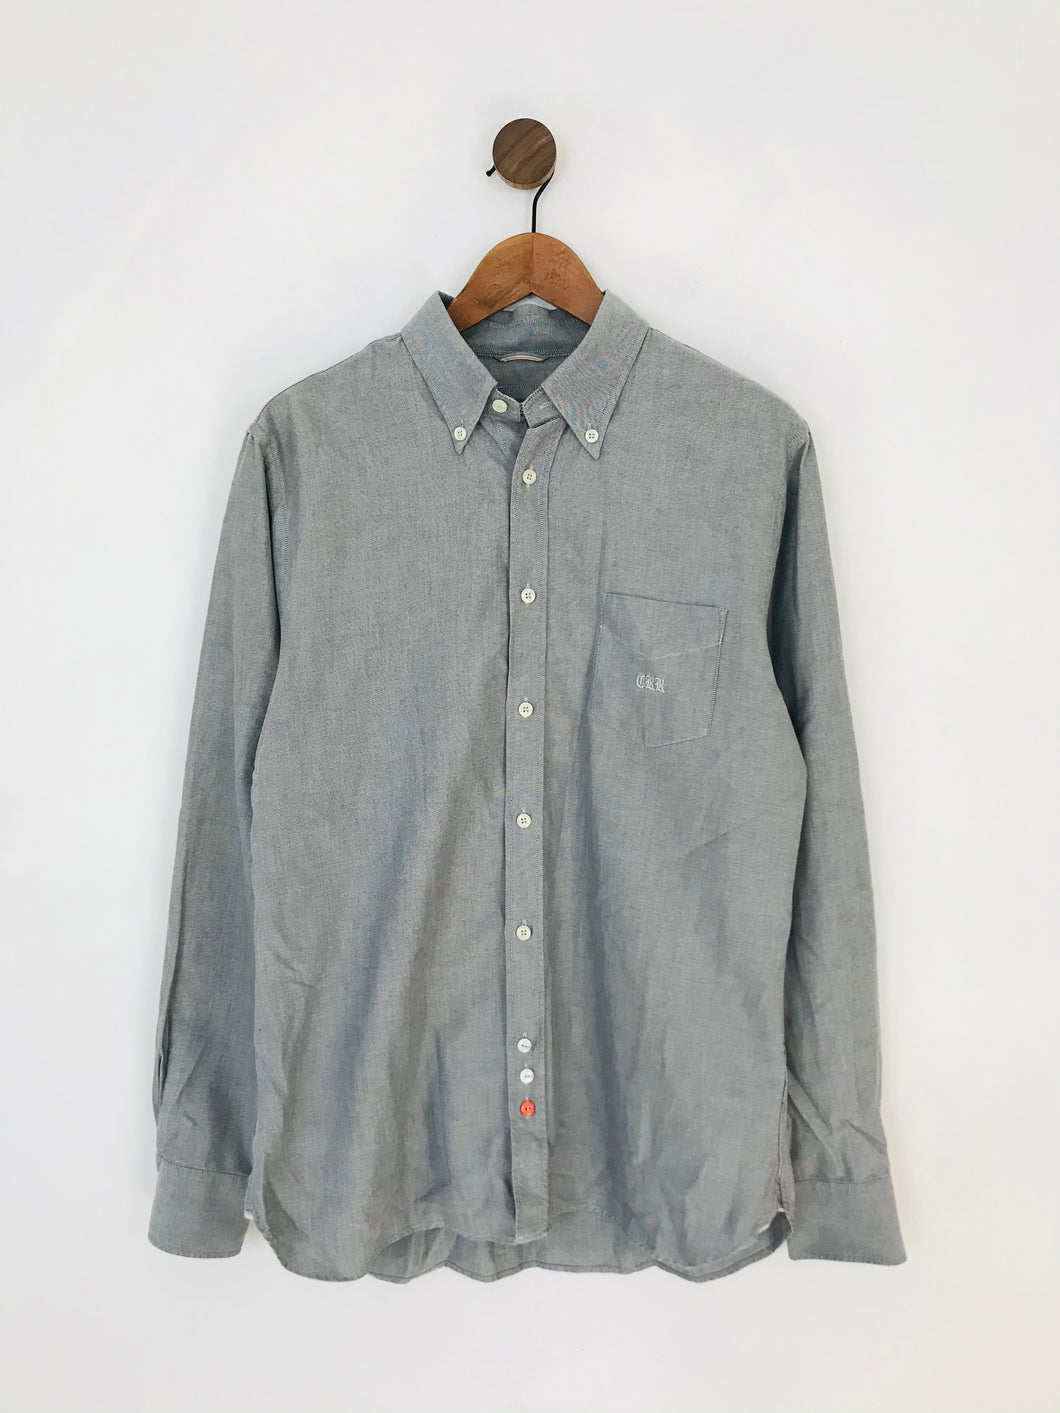 Cerruti Men’s Button Up Shirt | L | Grey